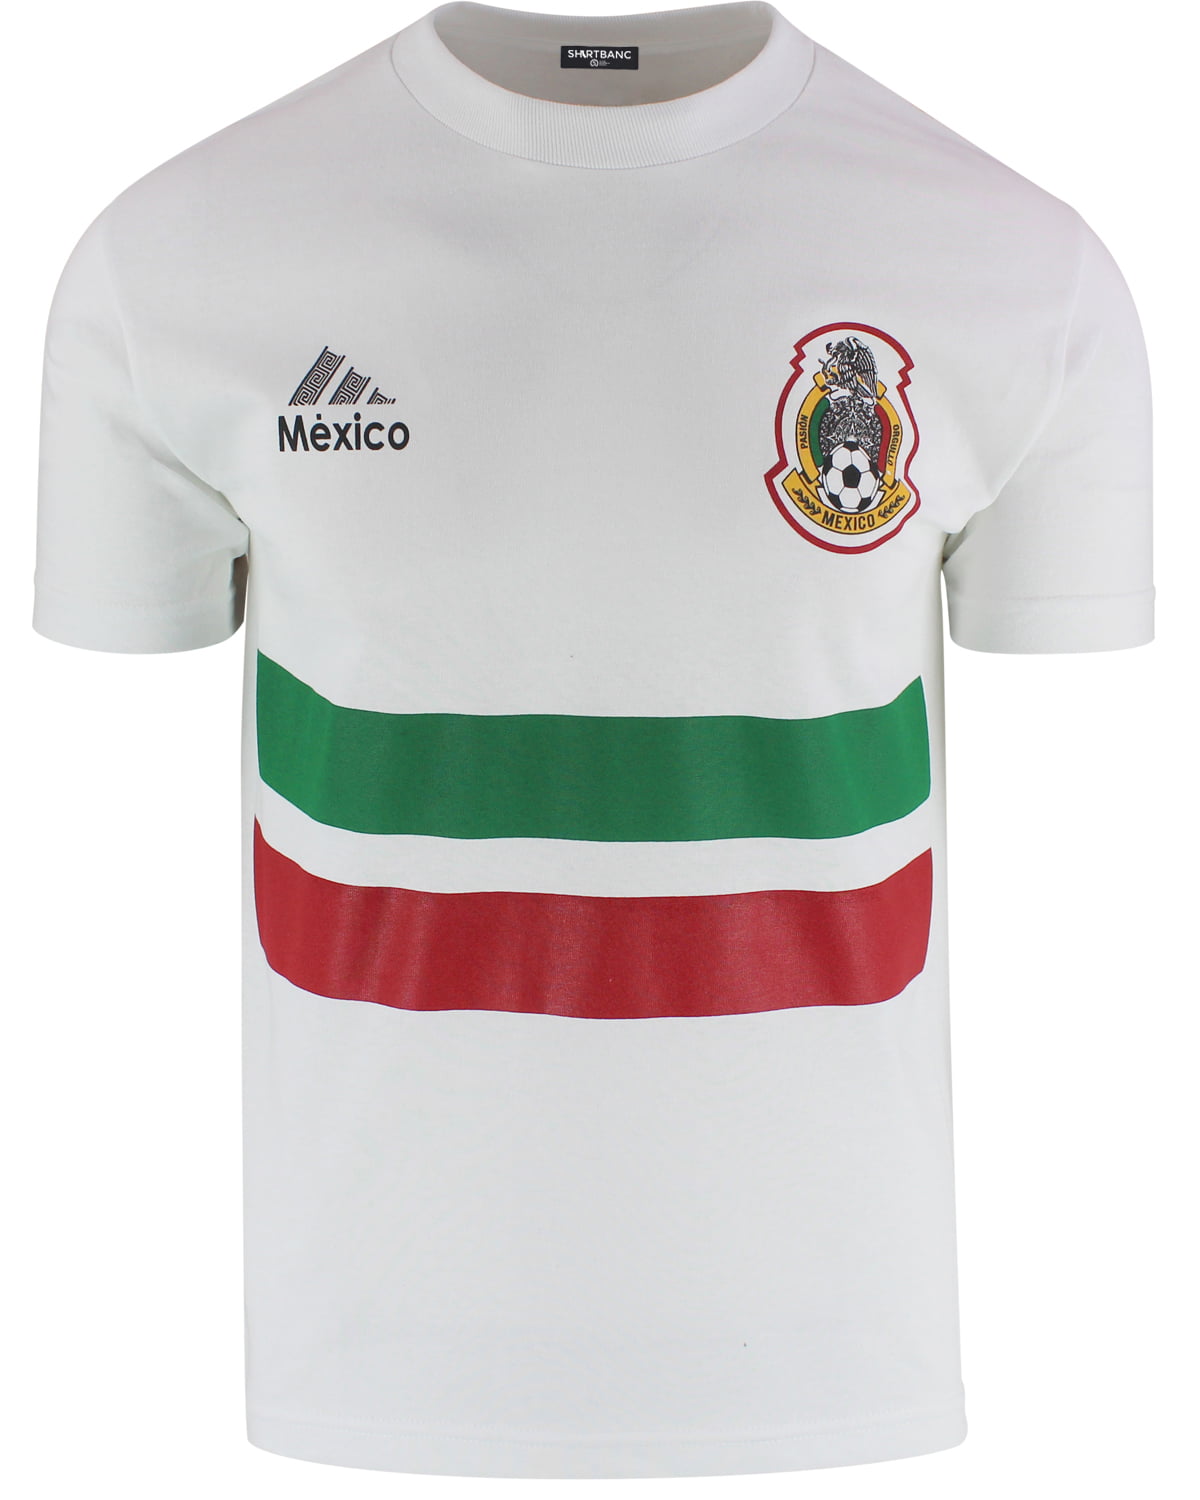 ShirtBANC Mexico Soccer Jersey T Shirt Futbol Mexicano Camisa de